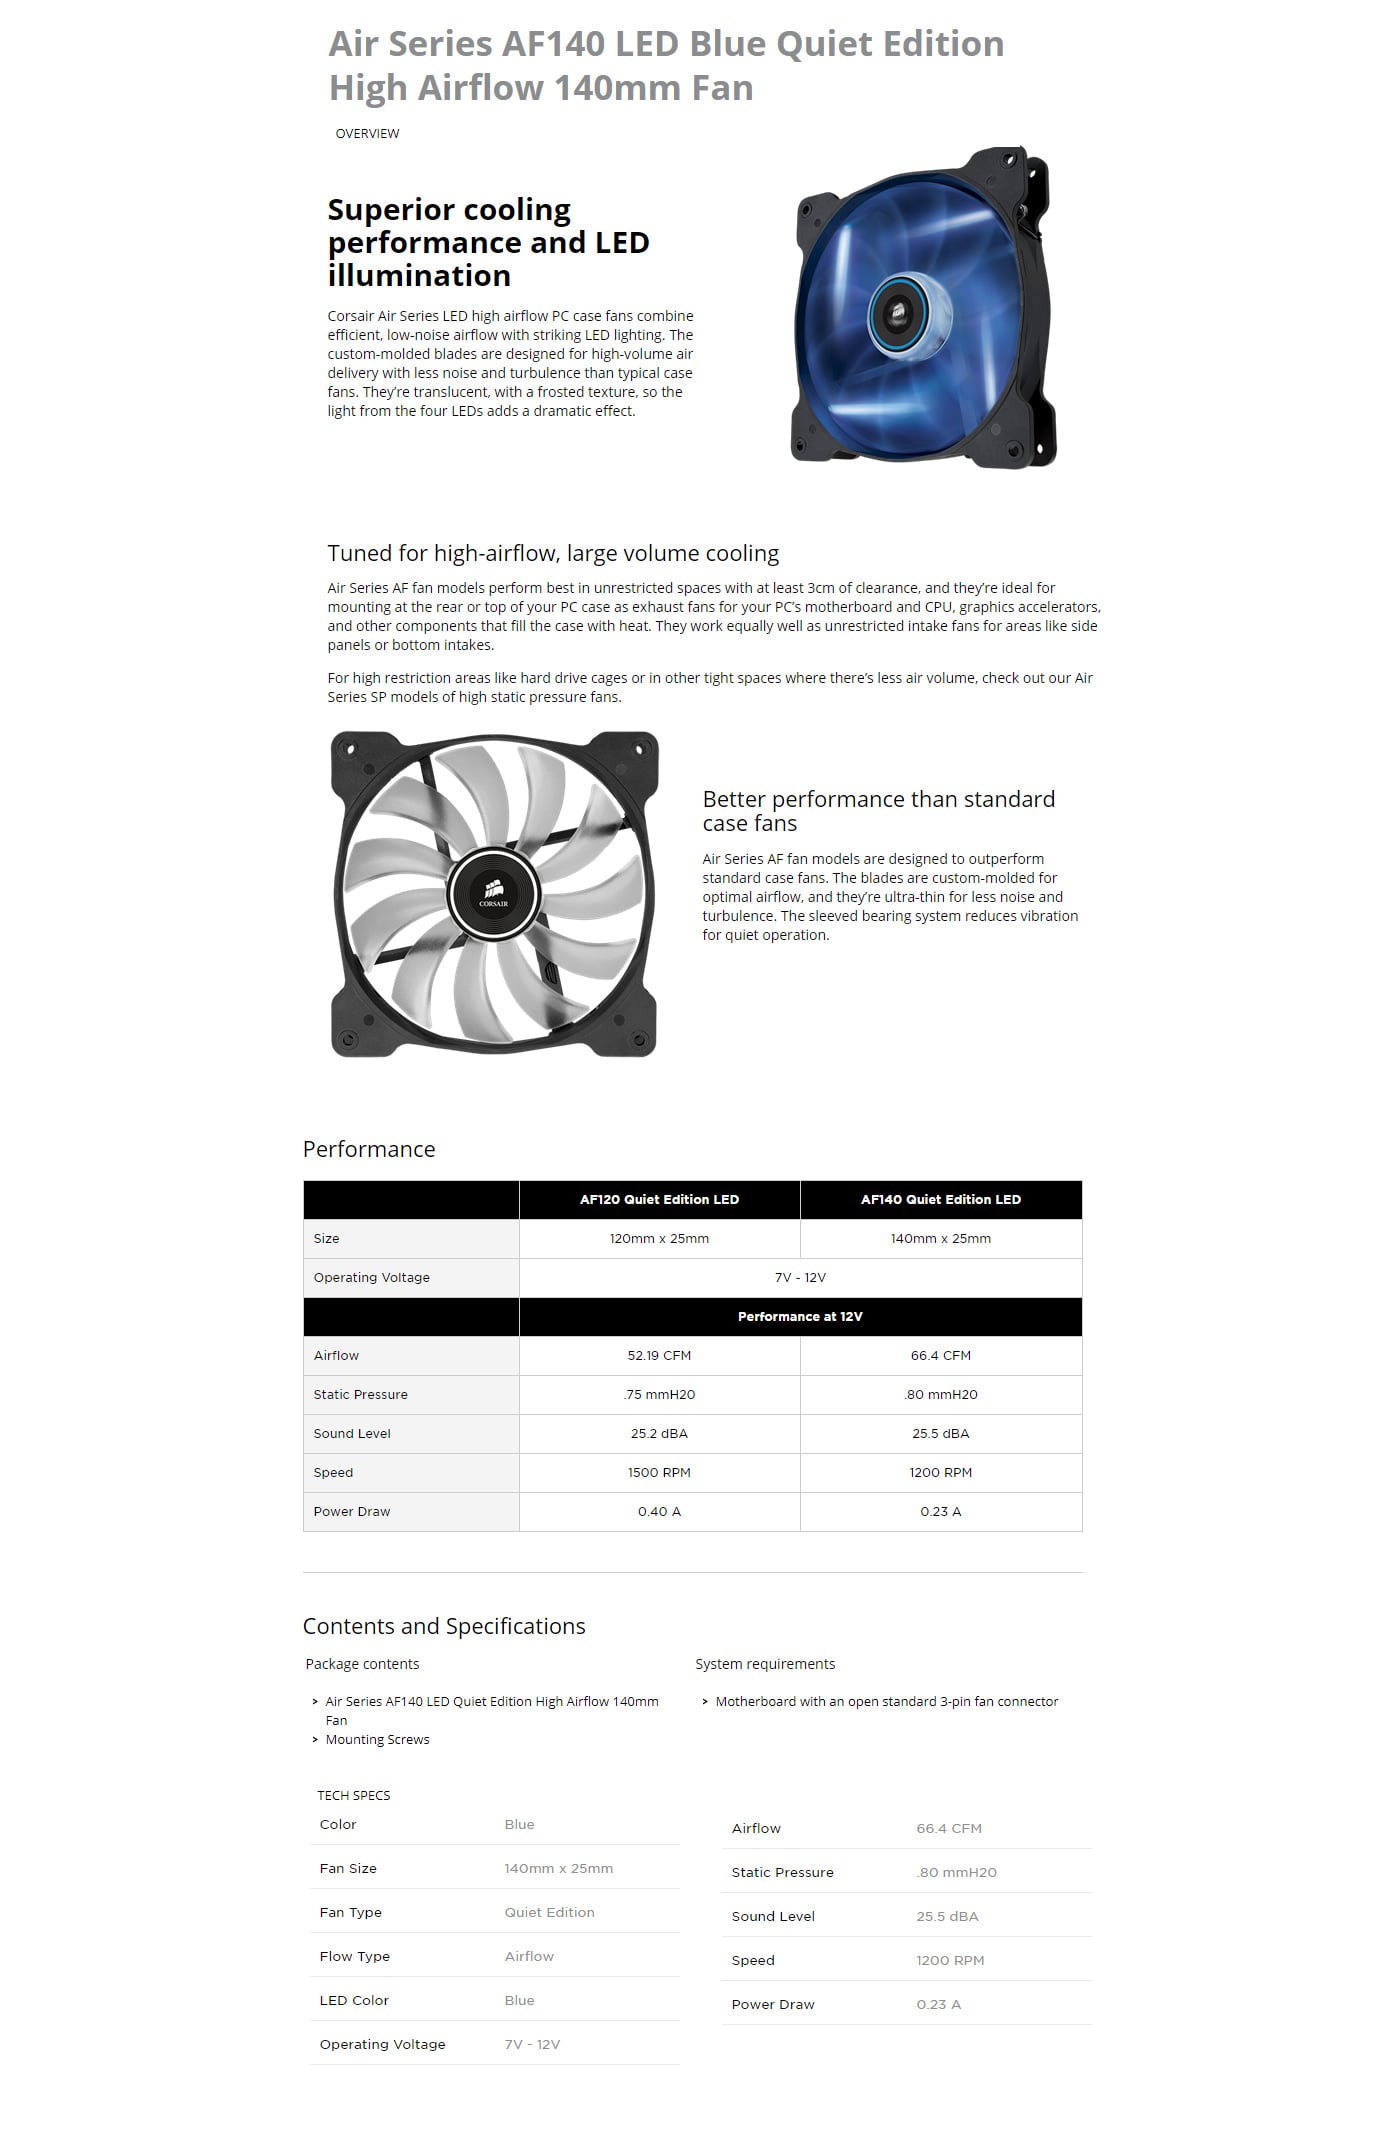 Corsair Air Series AF140 LED Blue Quiet Edition High Airflow 140mm Fan